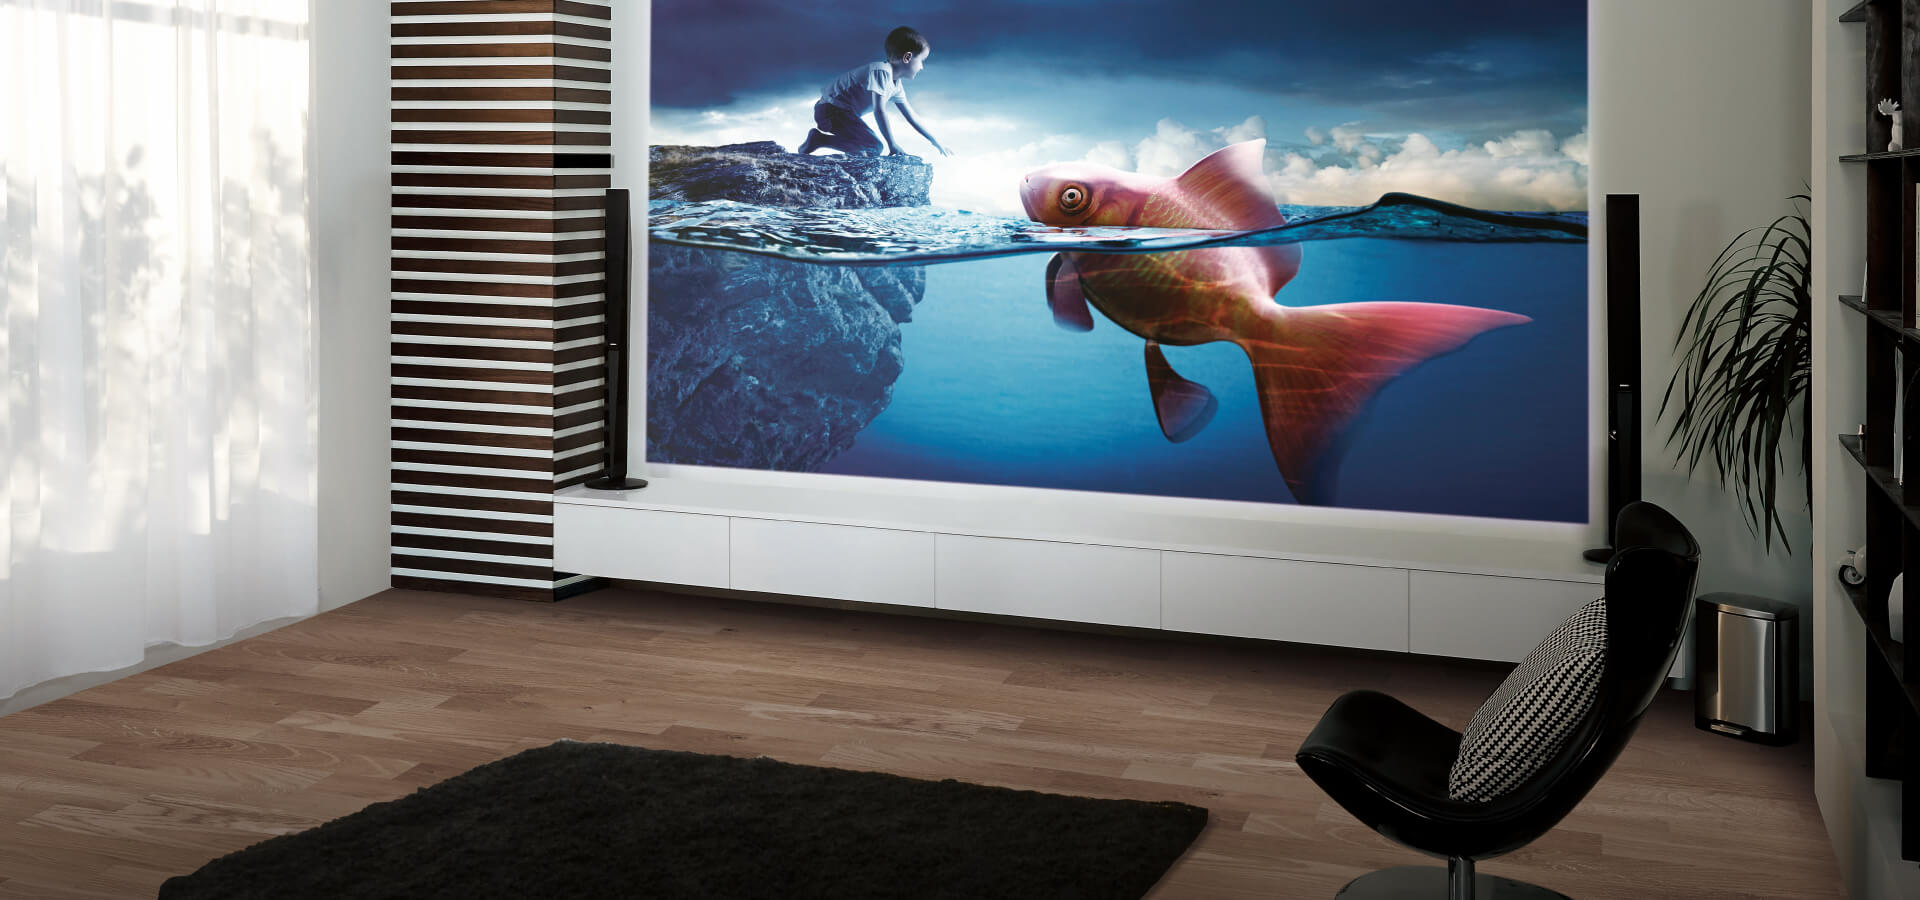 best 4k projector for living room